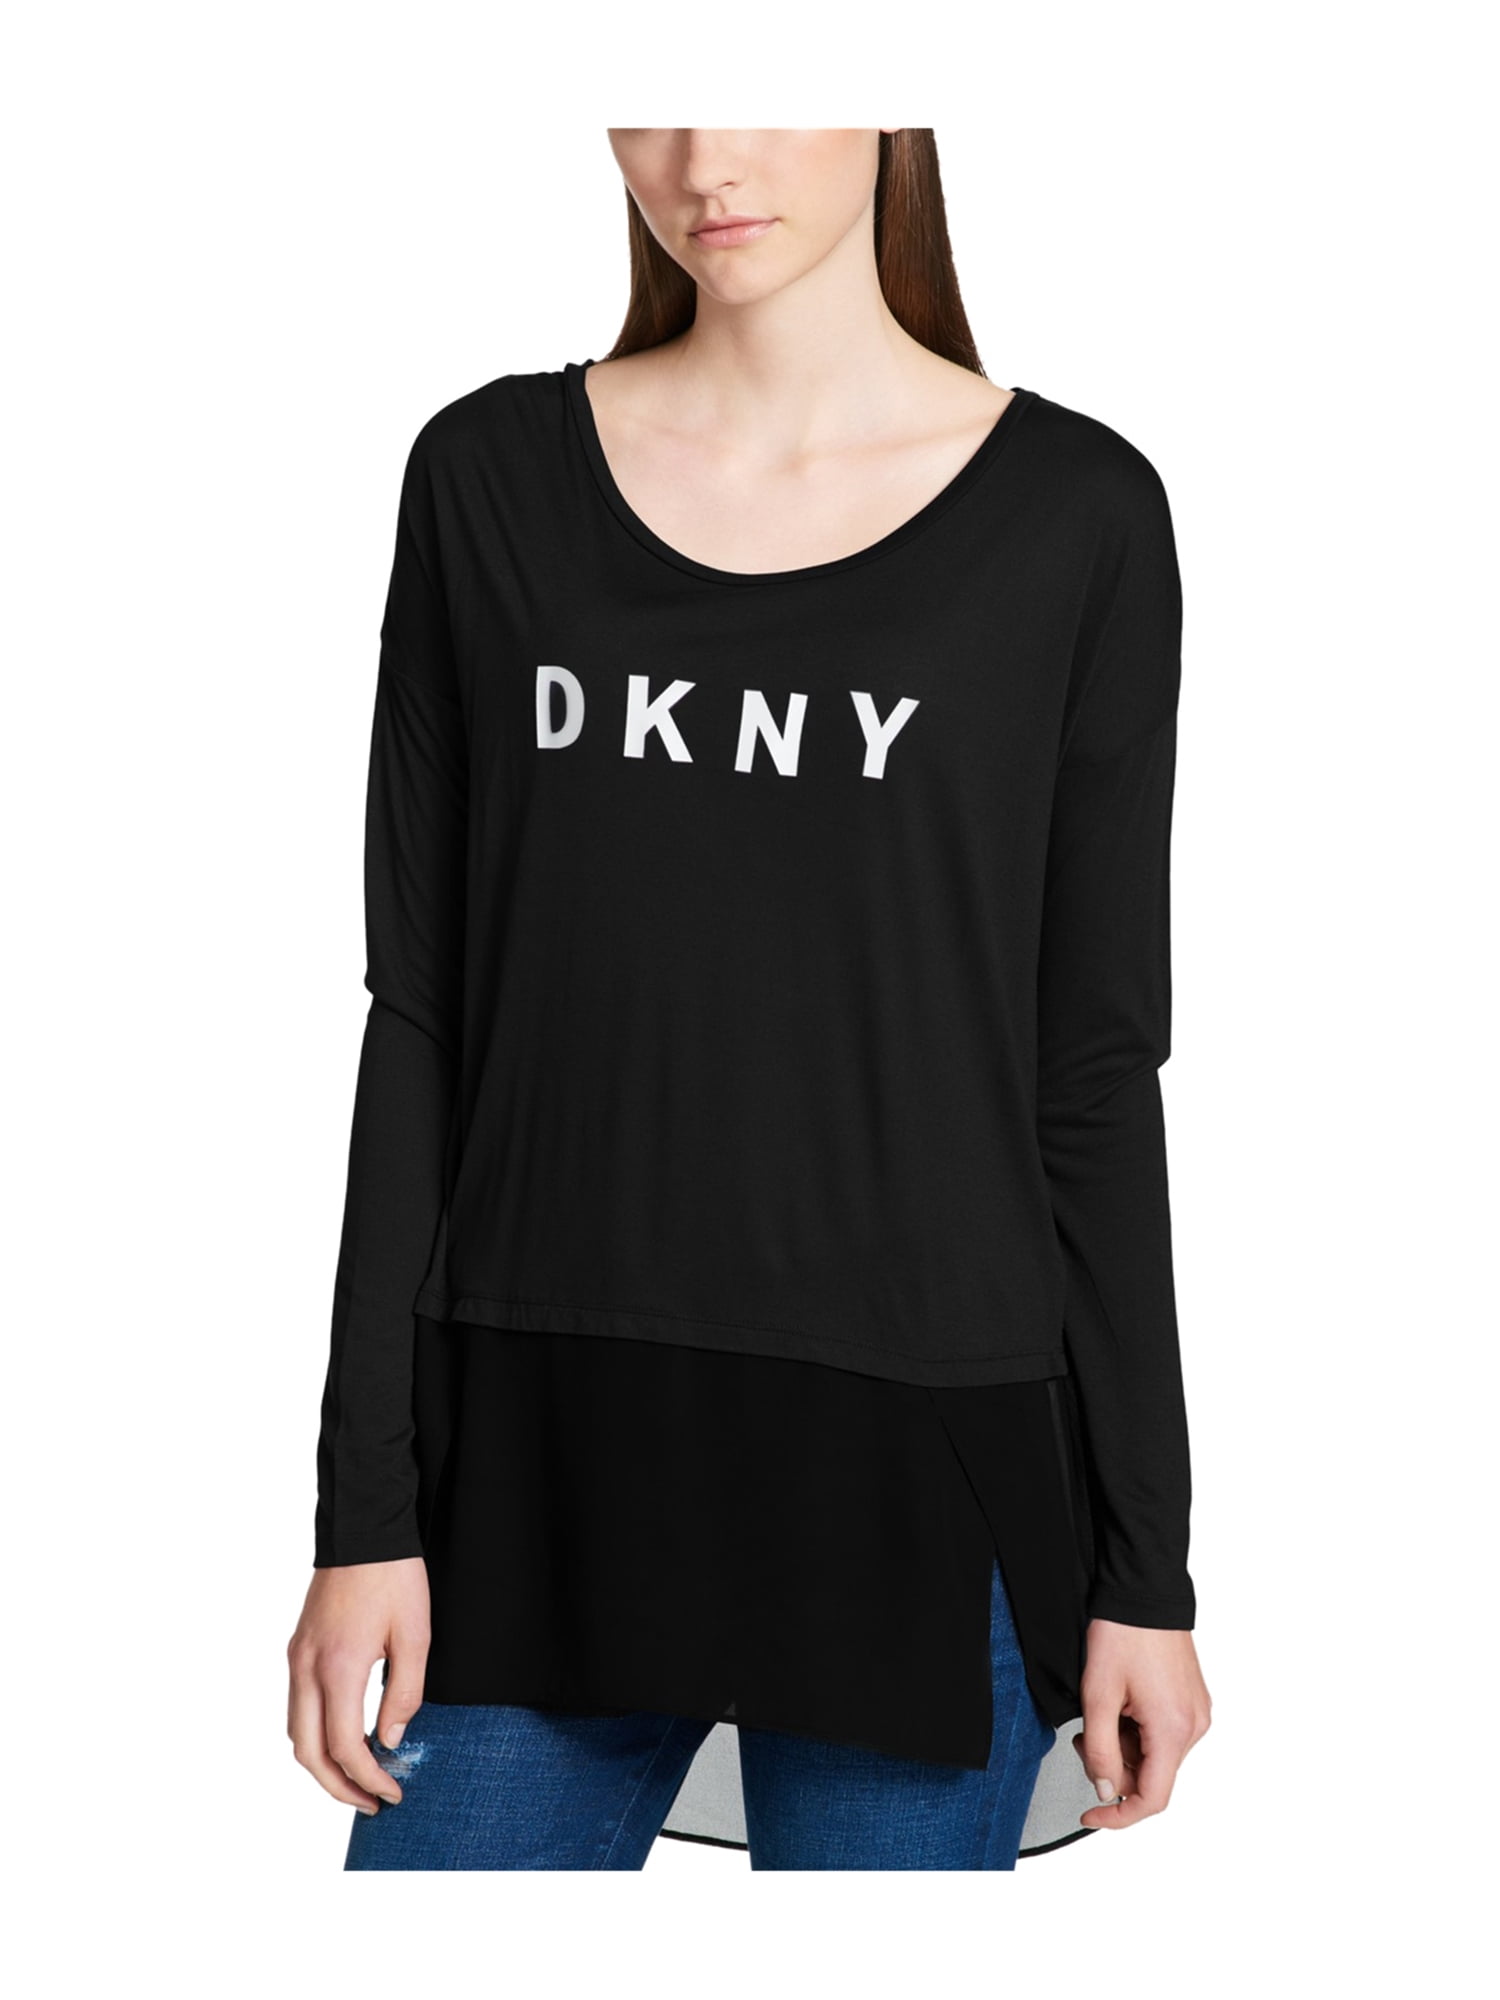 DKNY - DKNY Womens Mixed Media Hi-Lo Graphic T-Shirt - Walmart.com ...